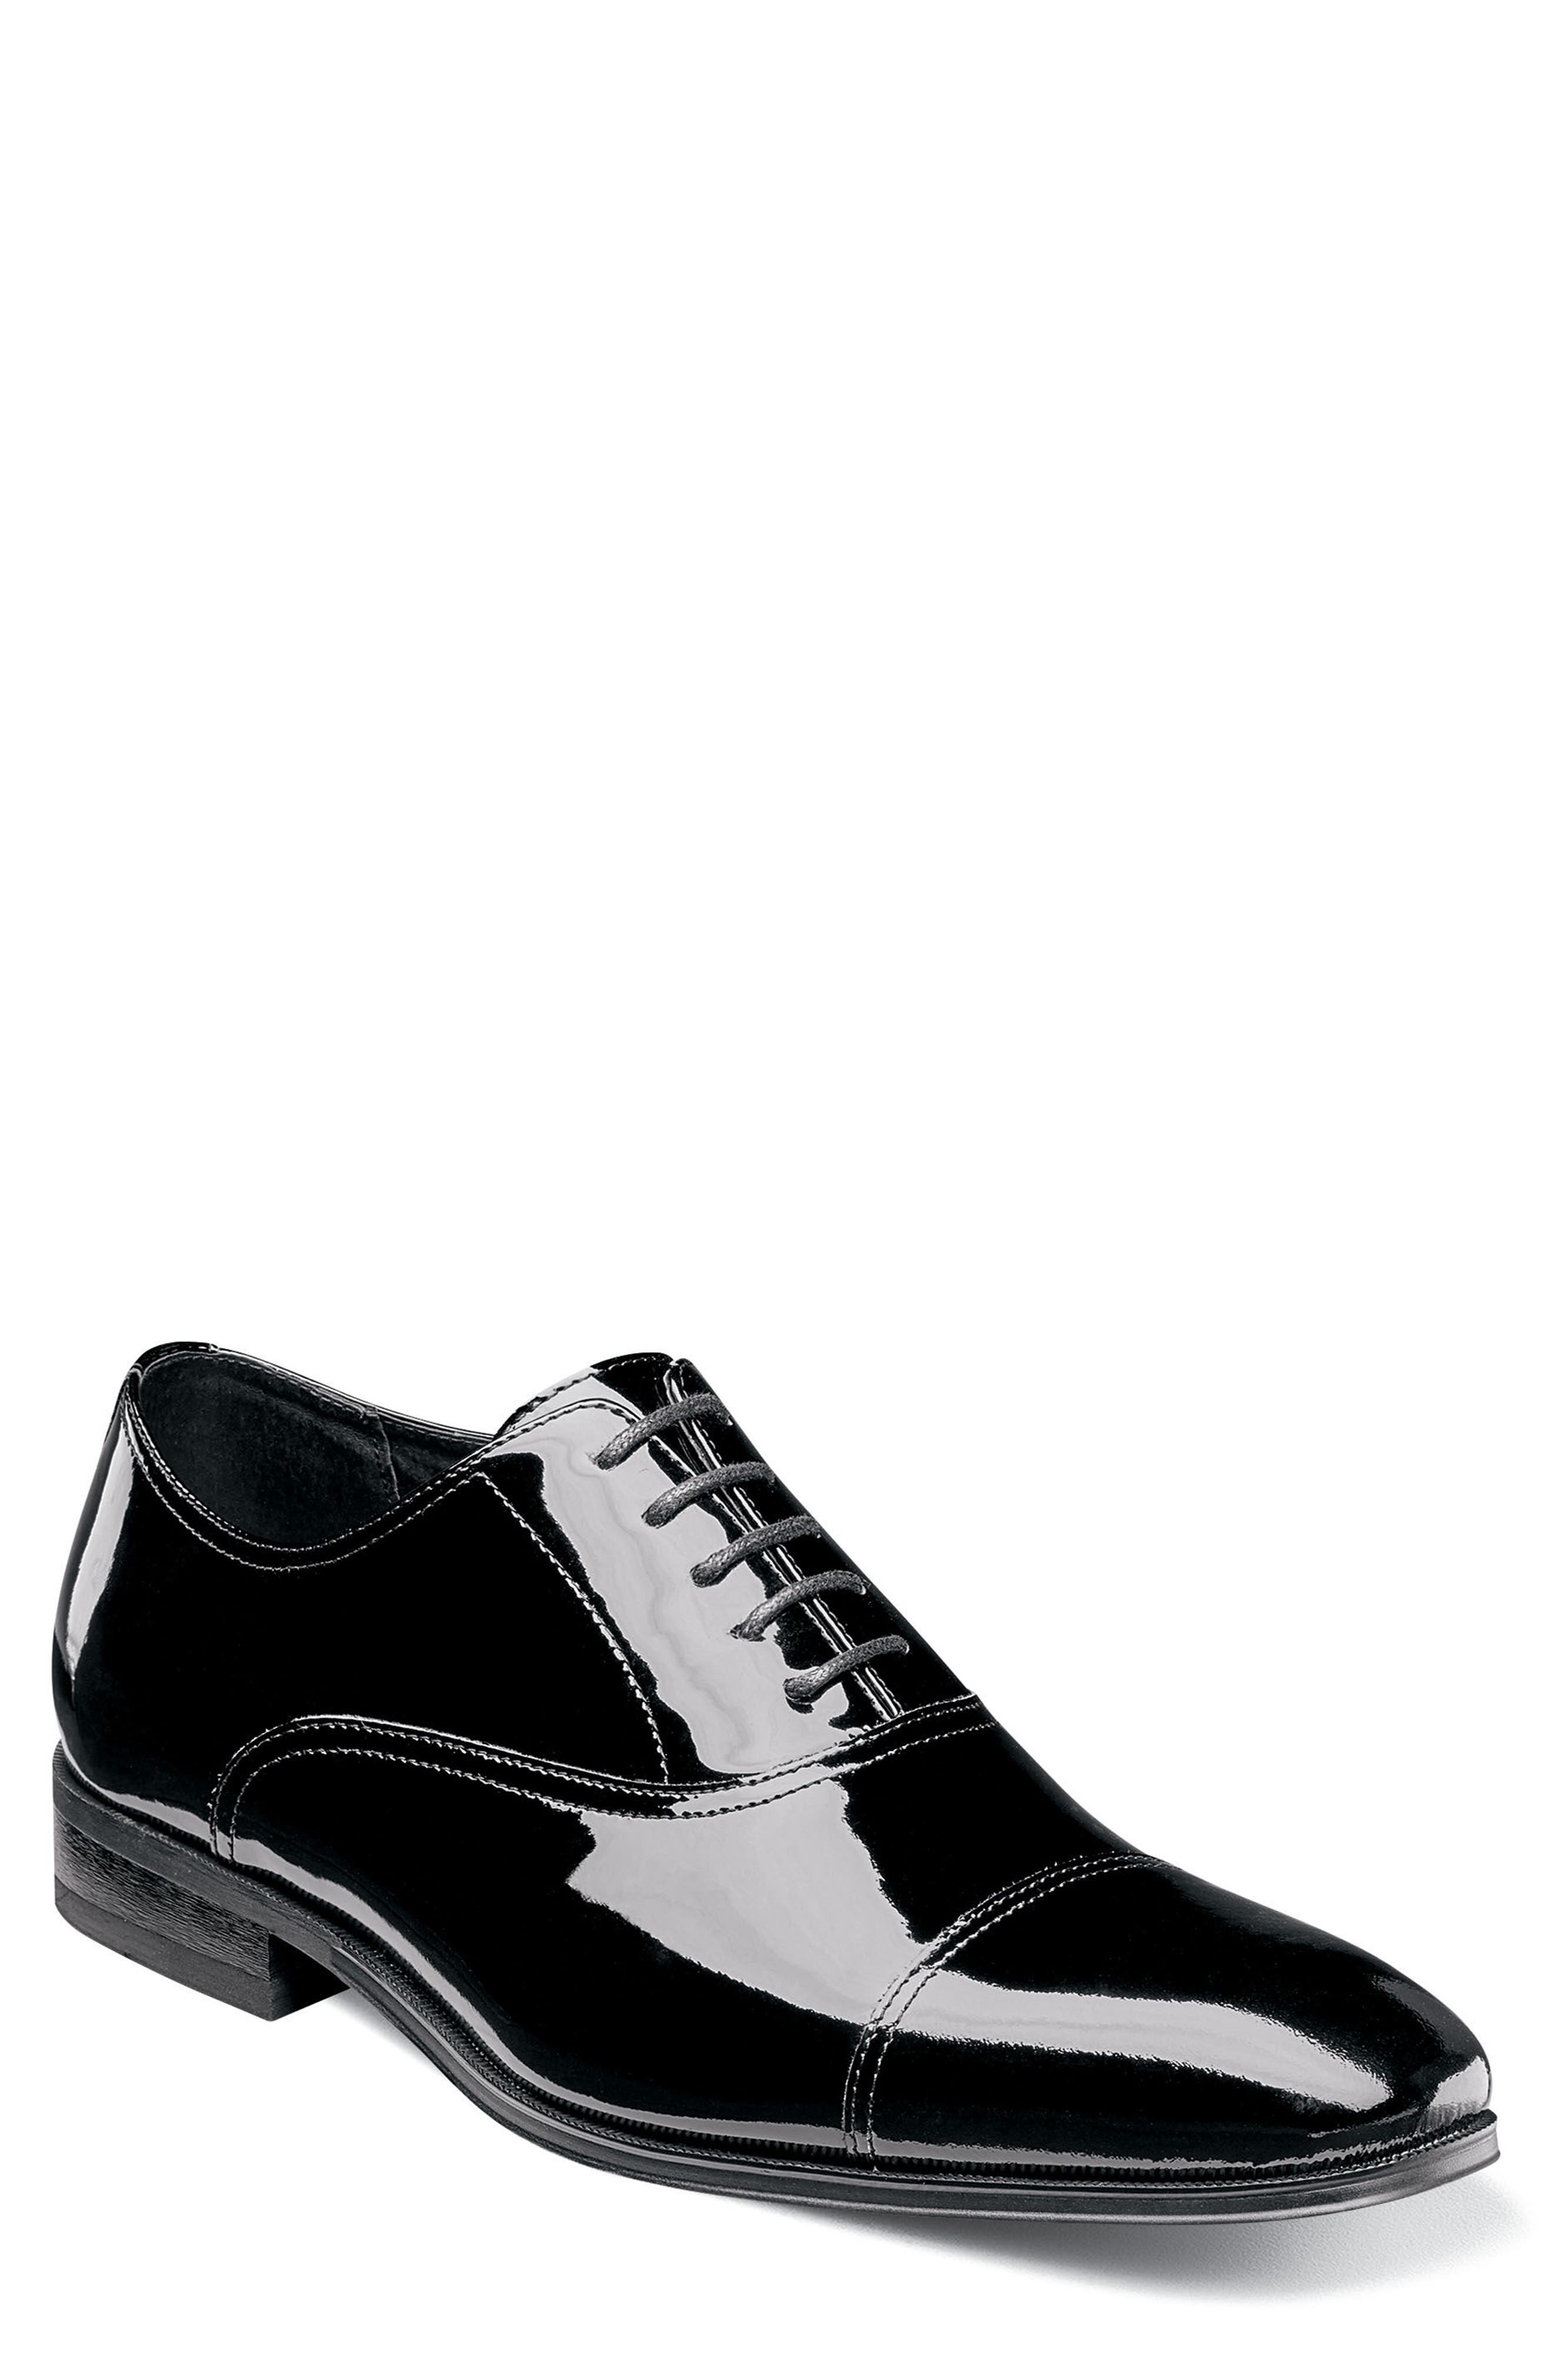 Mens Tuxedo Shoes \u0026 Formal Shoes 